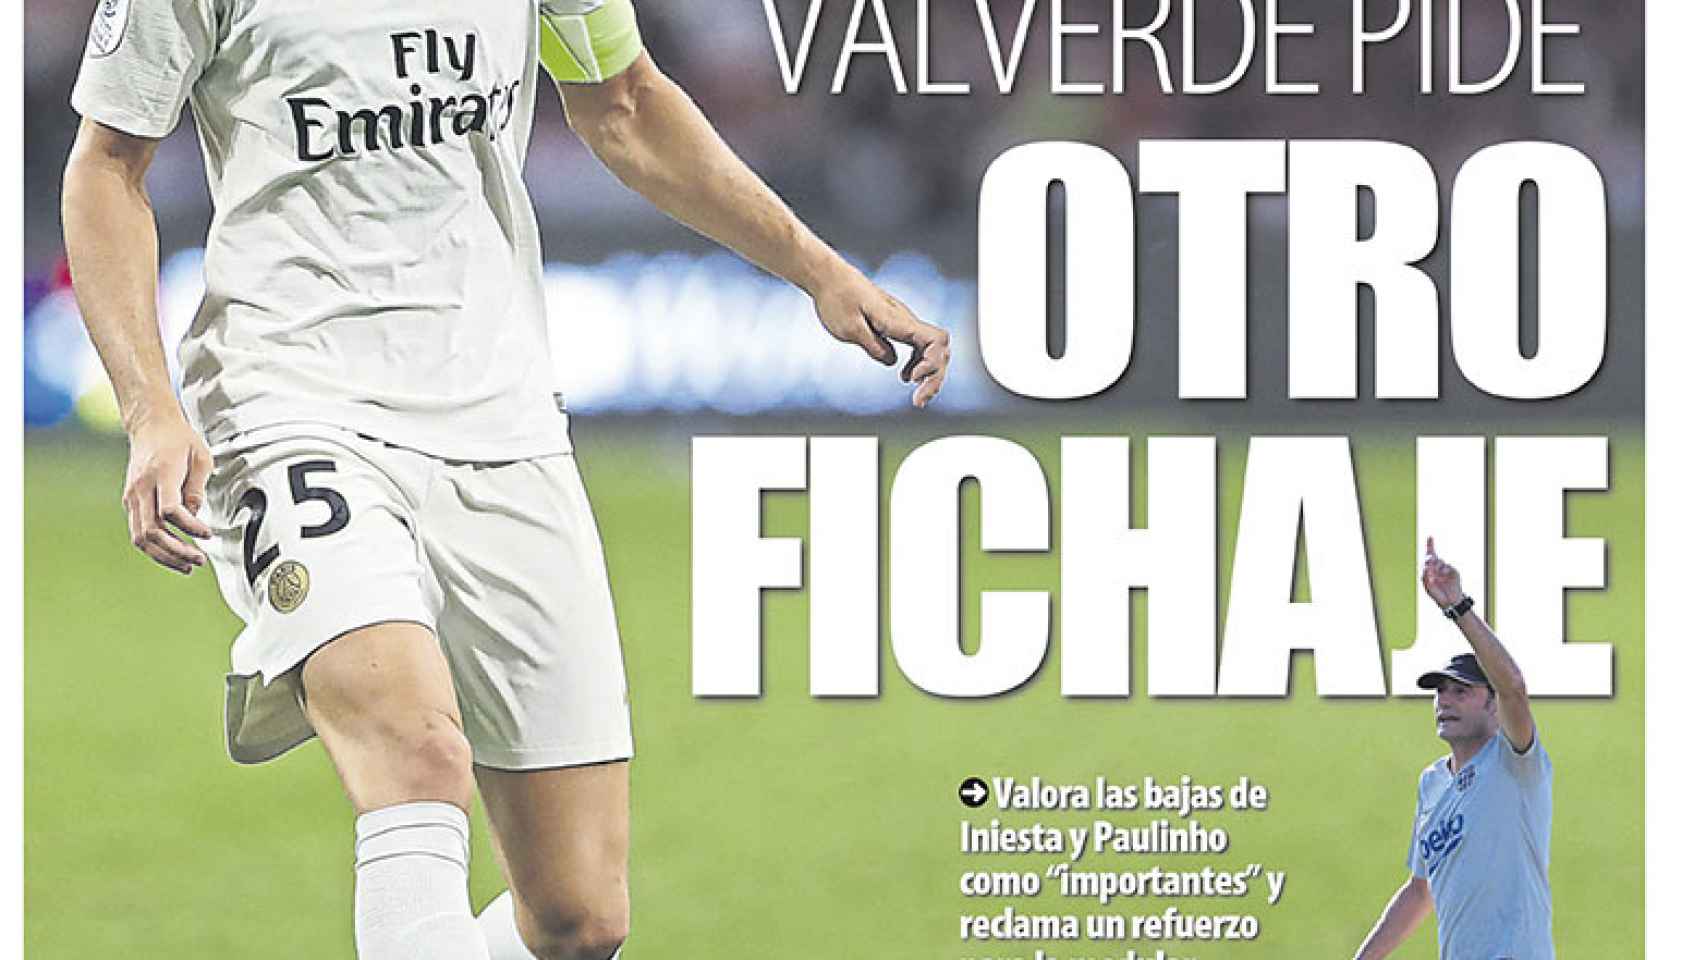 La portada del diario Mundo Deportivo (29/07/2018)1706 x 960